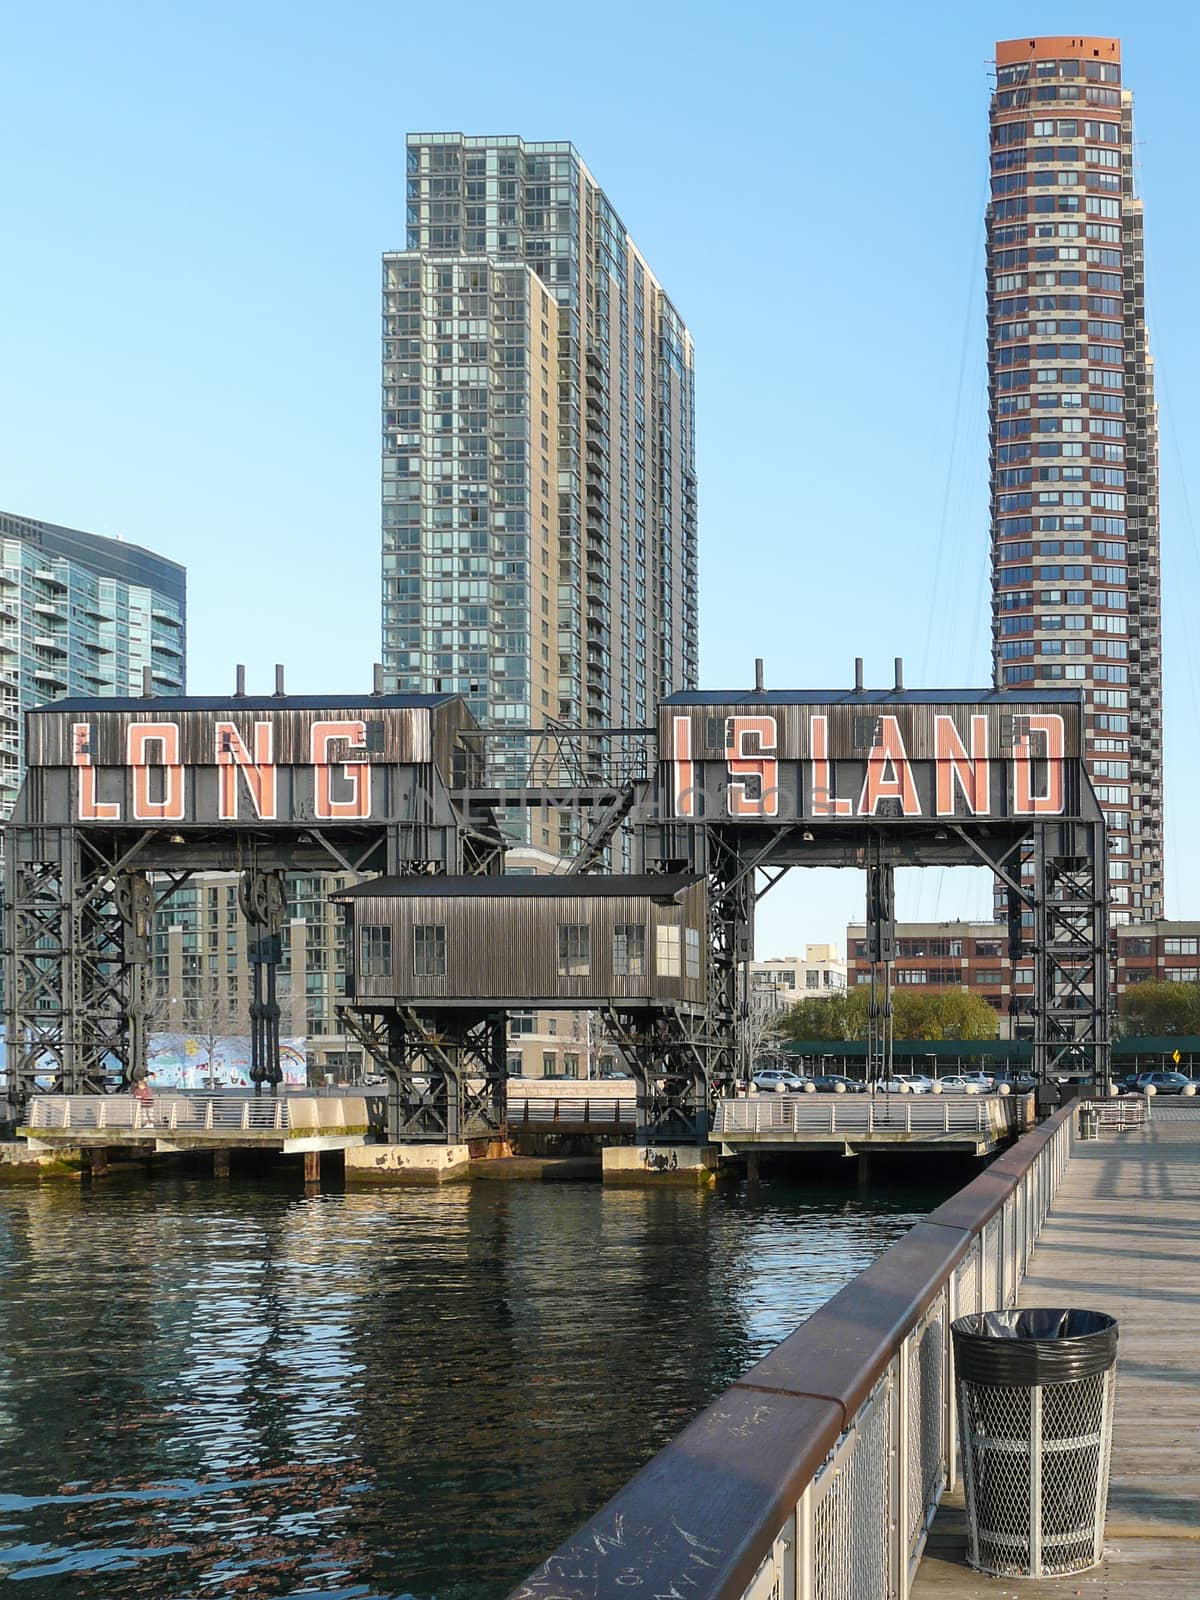 Wharf Crane at Long Island by wit_gorski